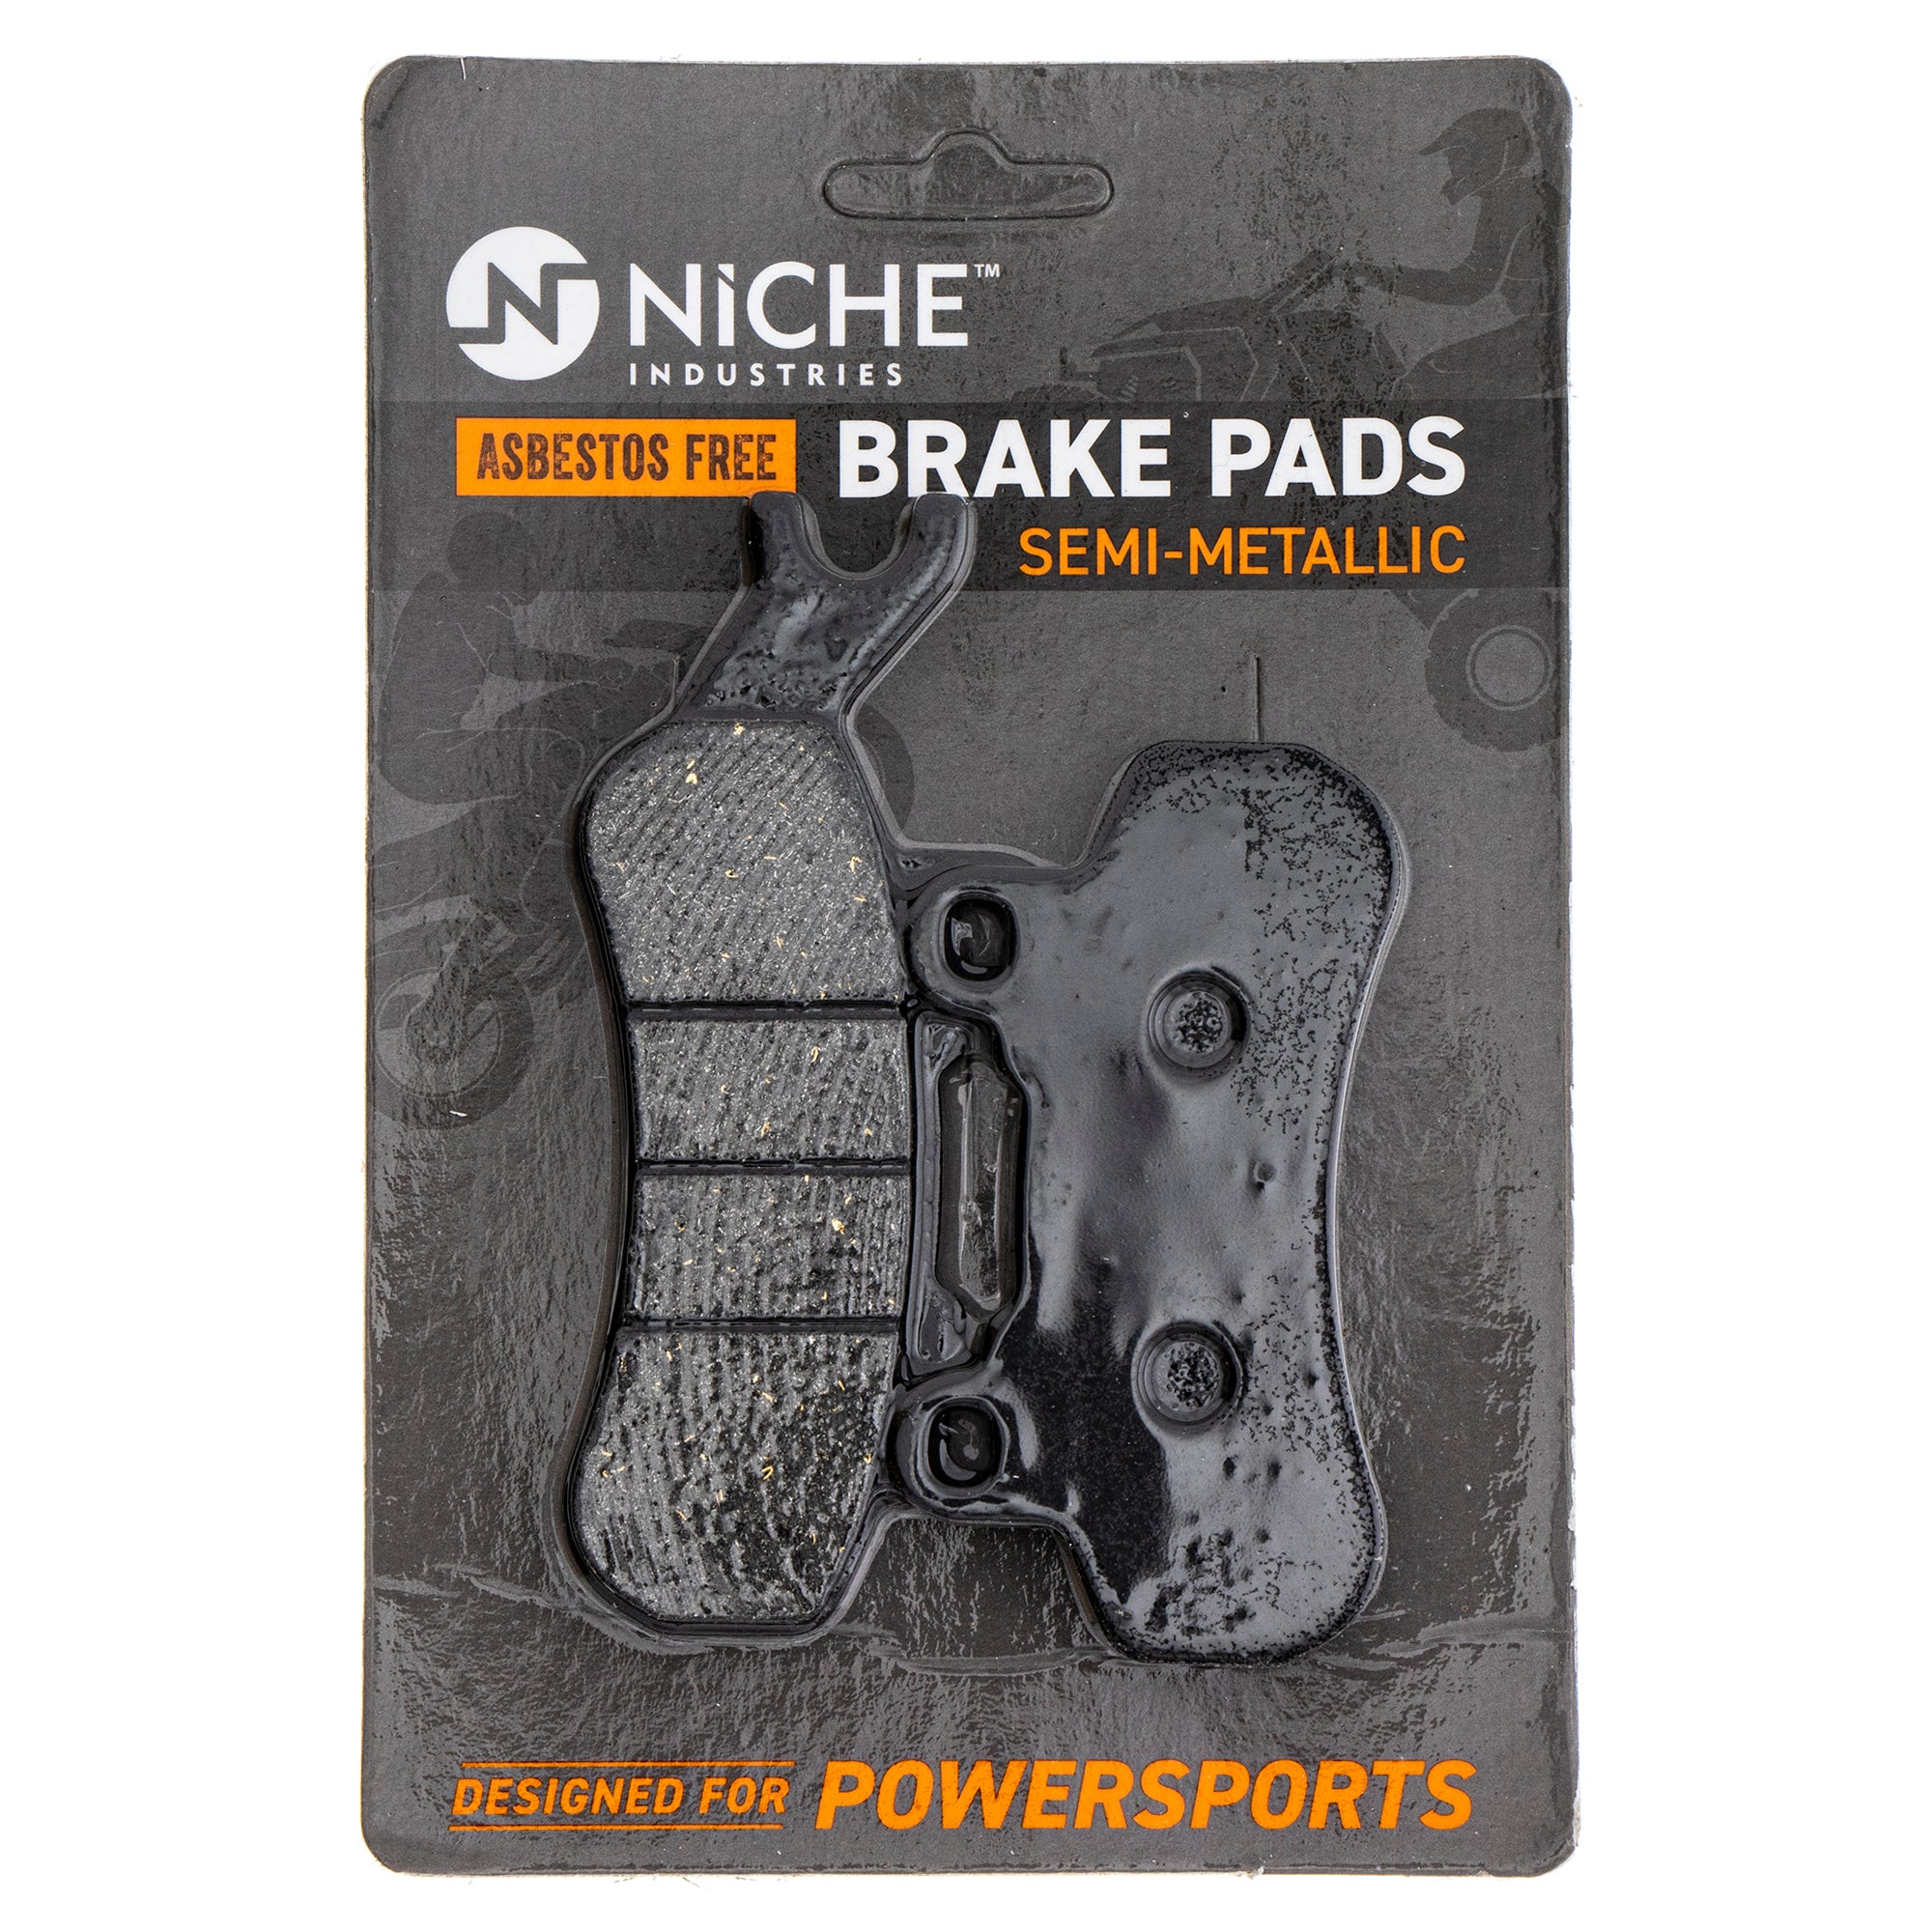 Semi-Metallic Brake Pads for BRP Can-Am Ski-Doo Sea-Doo Traxter Maverick 715900380 NICHE 519-KPA2330D